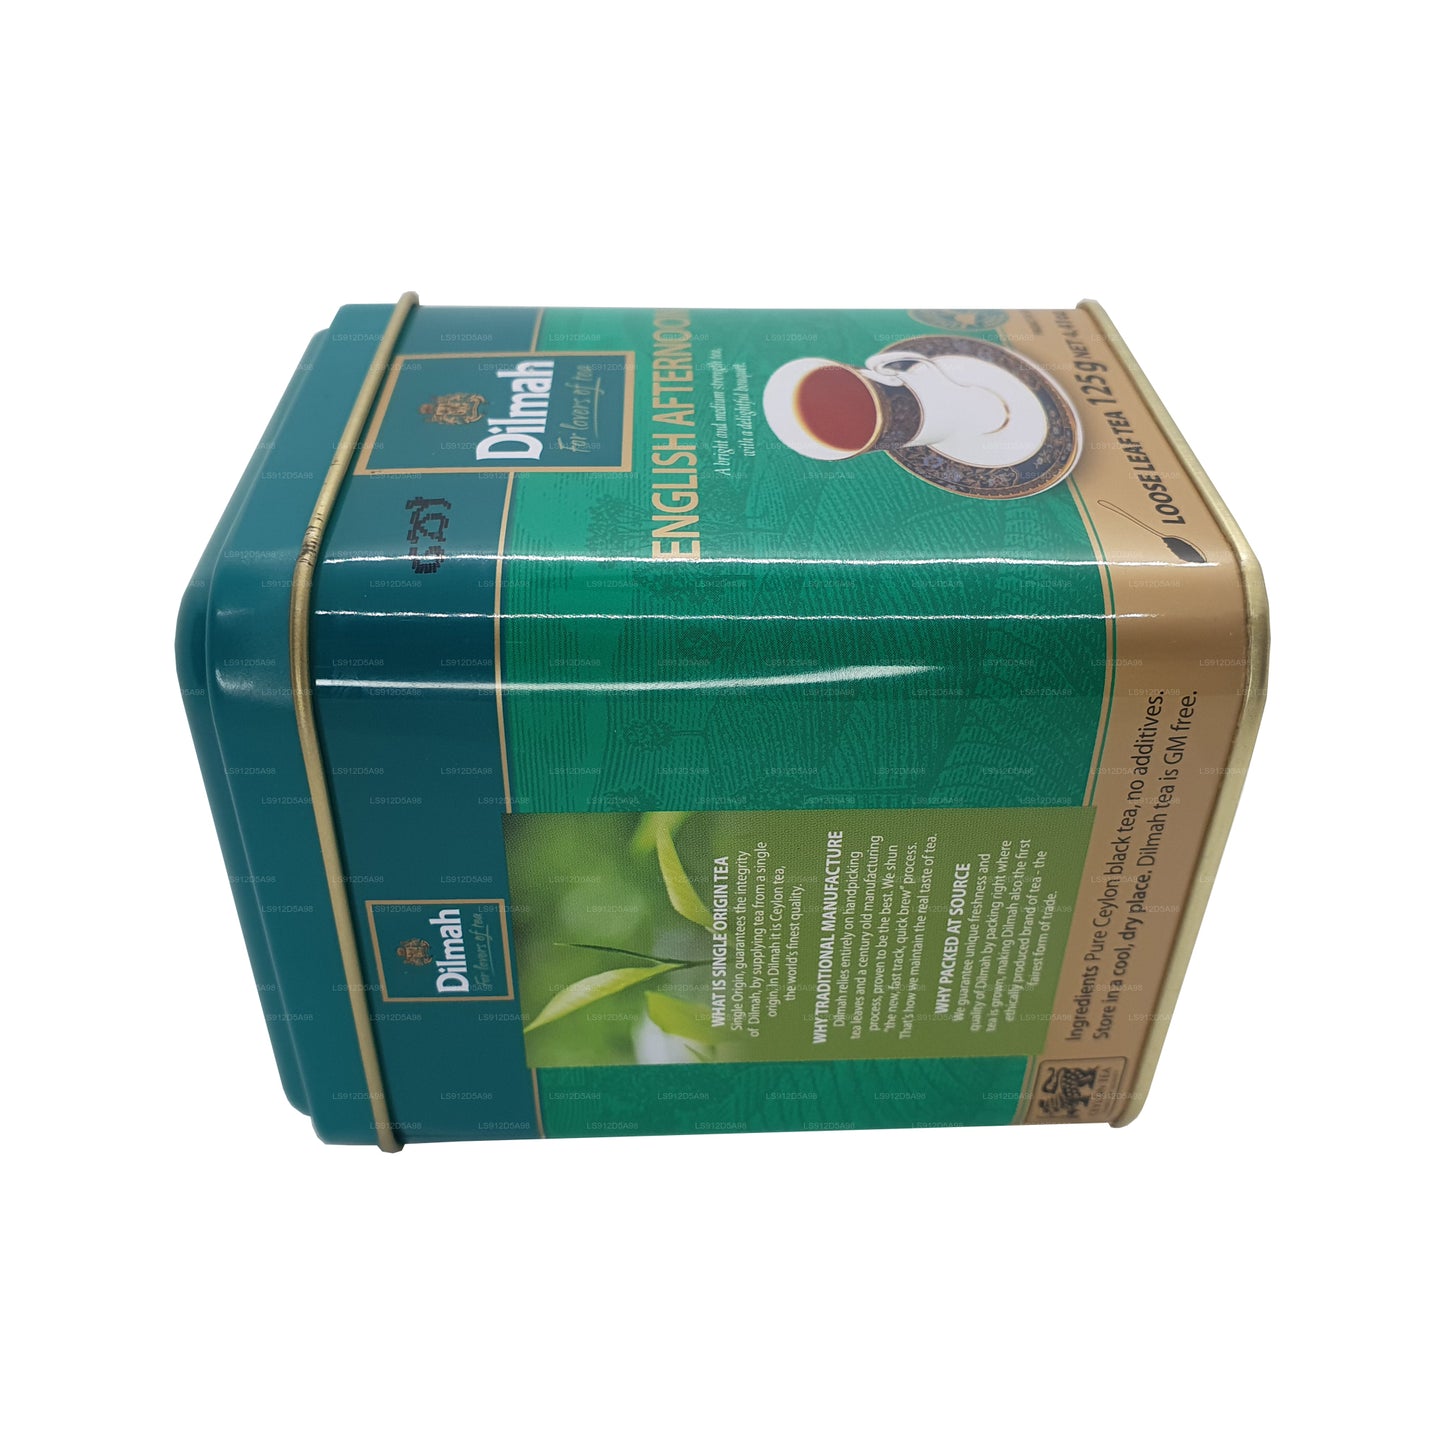 Dilmah English Afternoon Loose Leaf Tea caddy (125g)